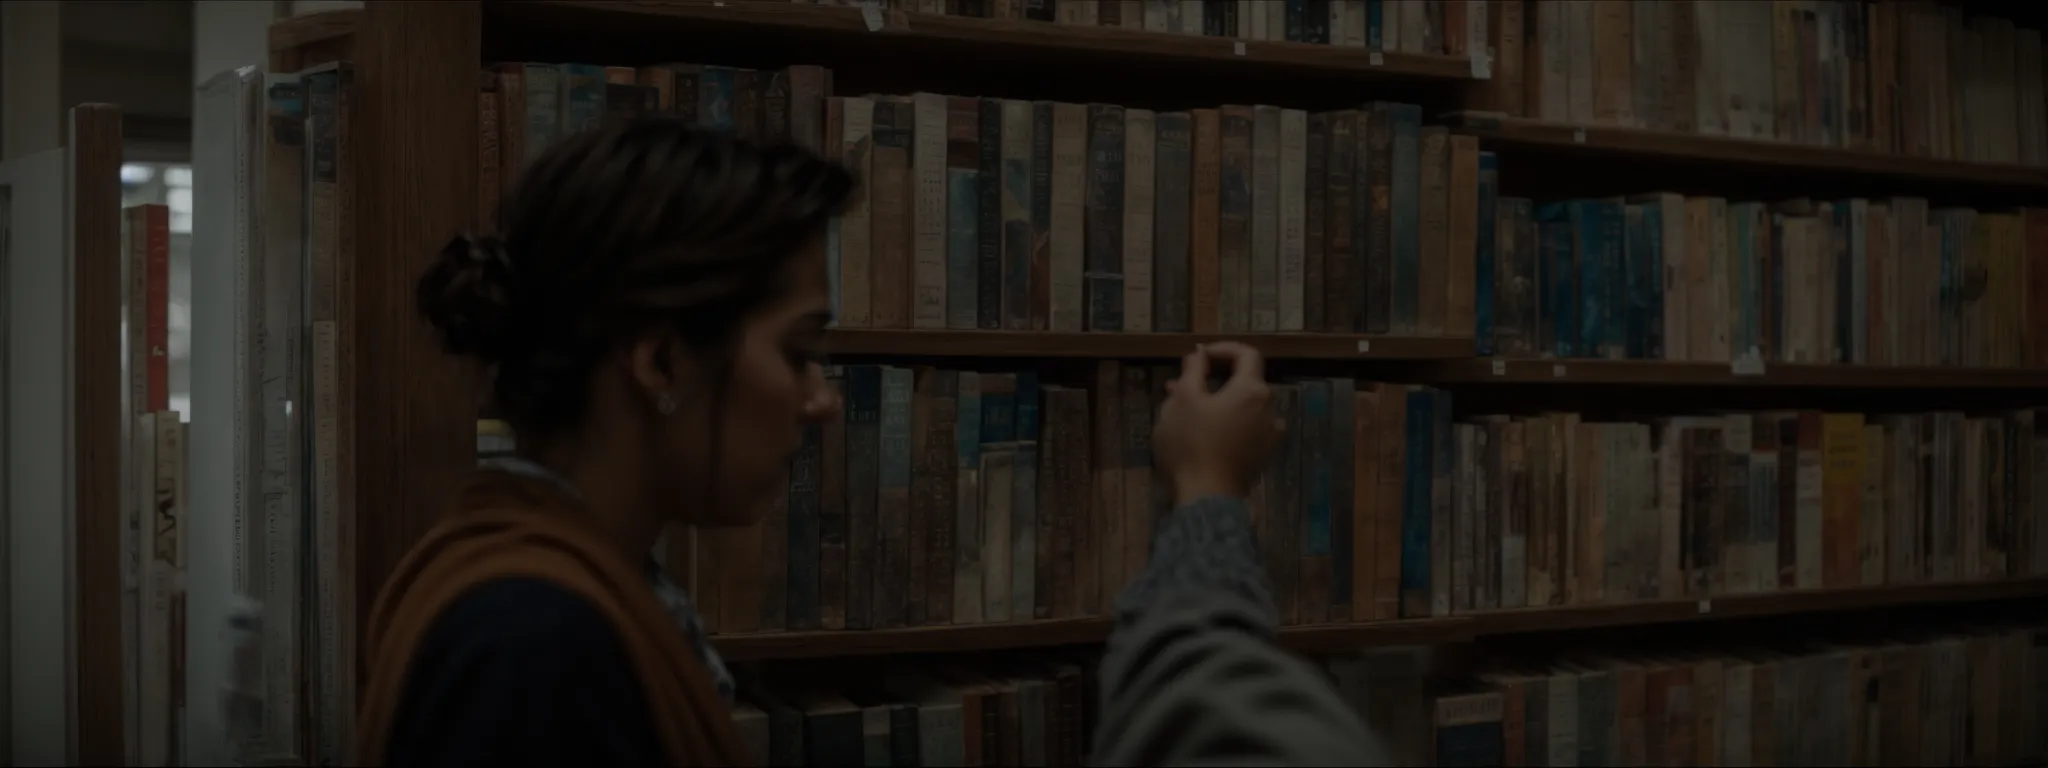 a librarian categorizing books on a shelf, ensuring each has a unique place.